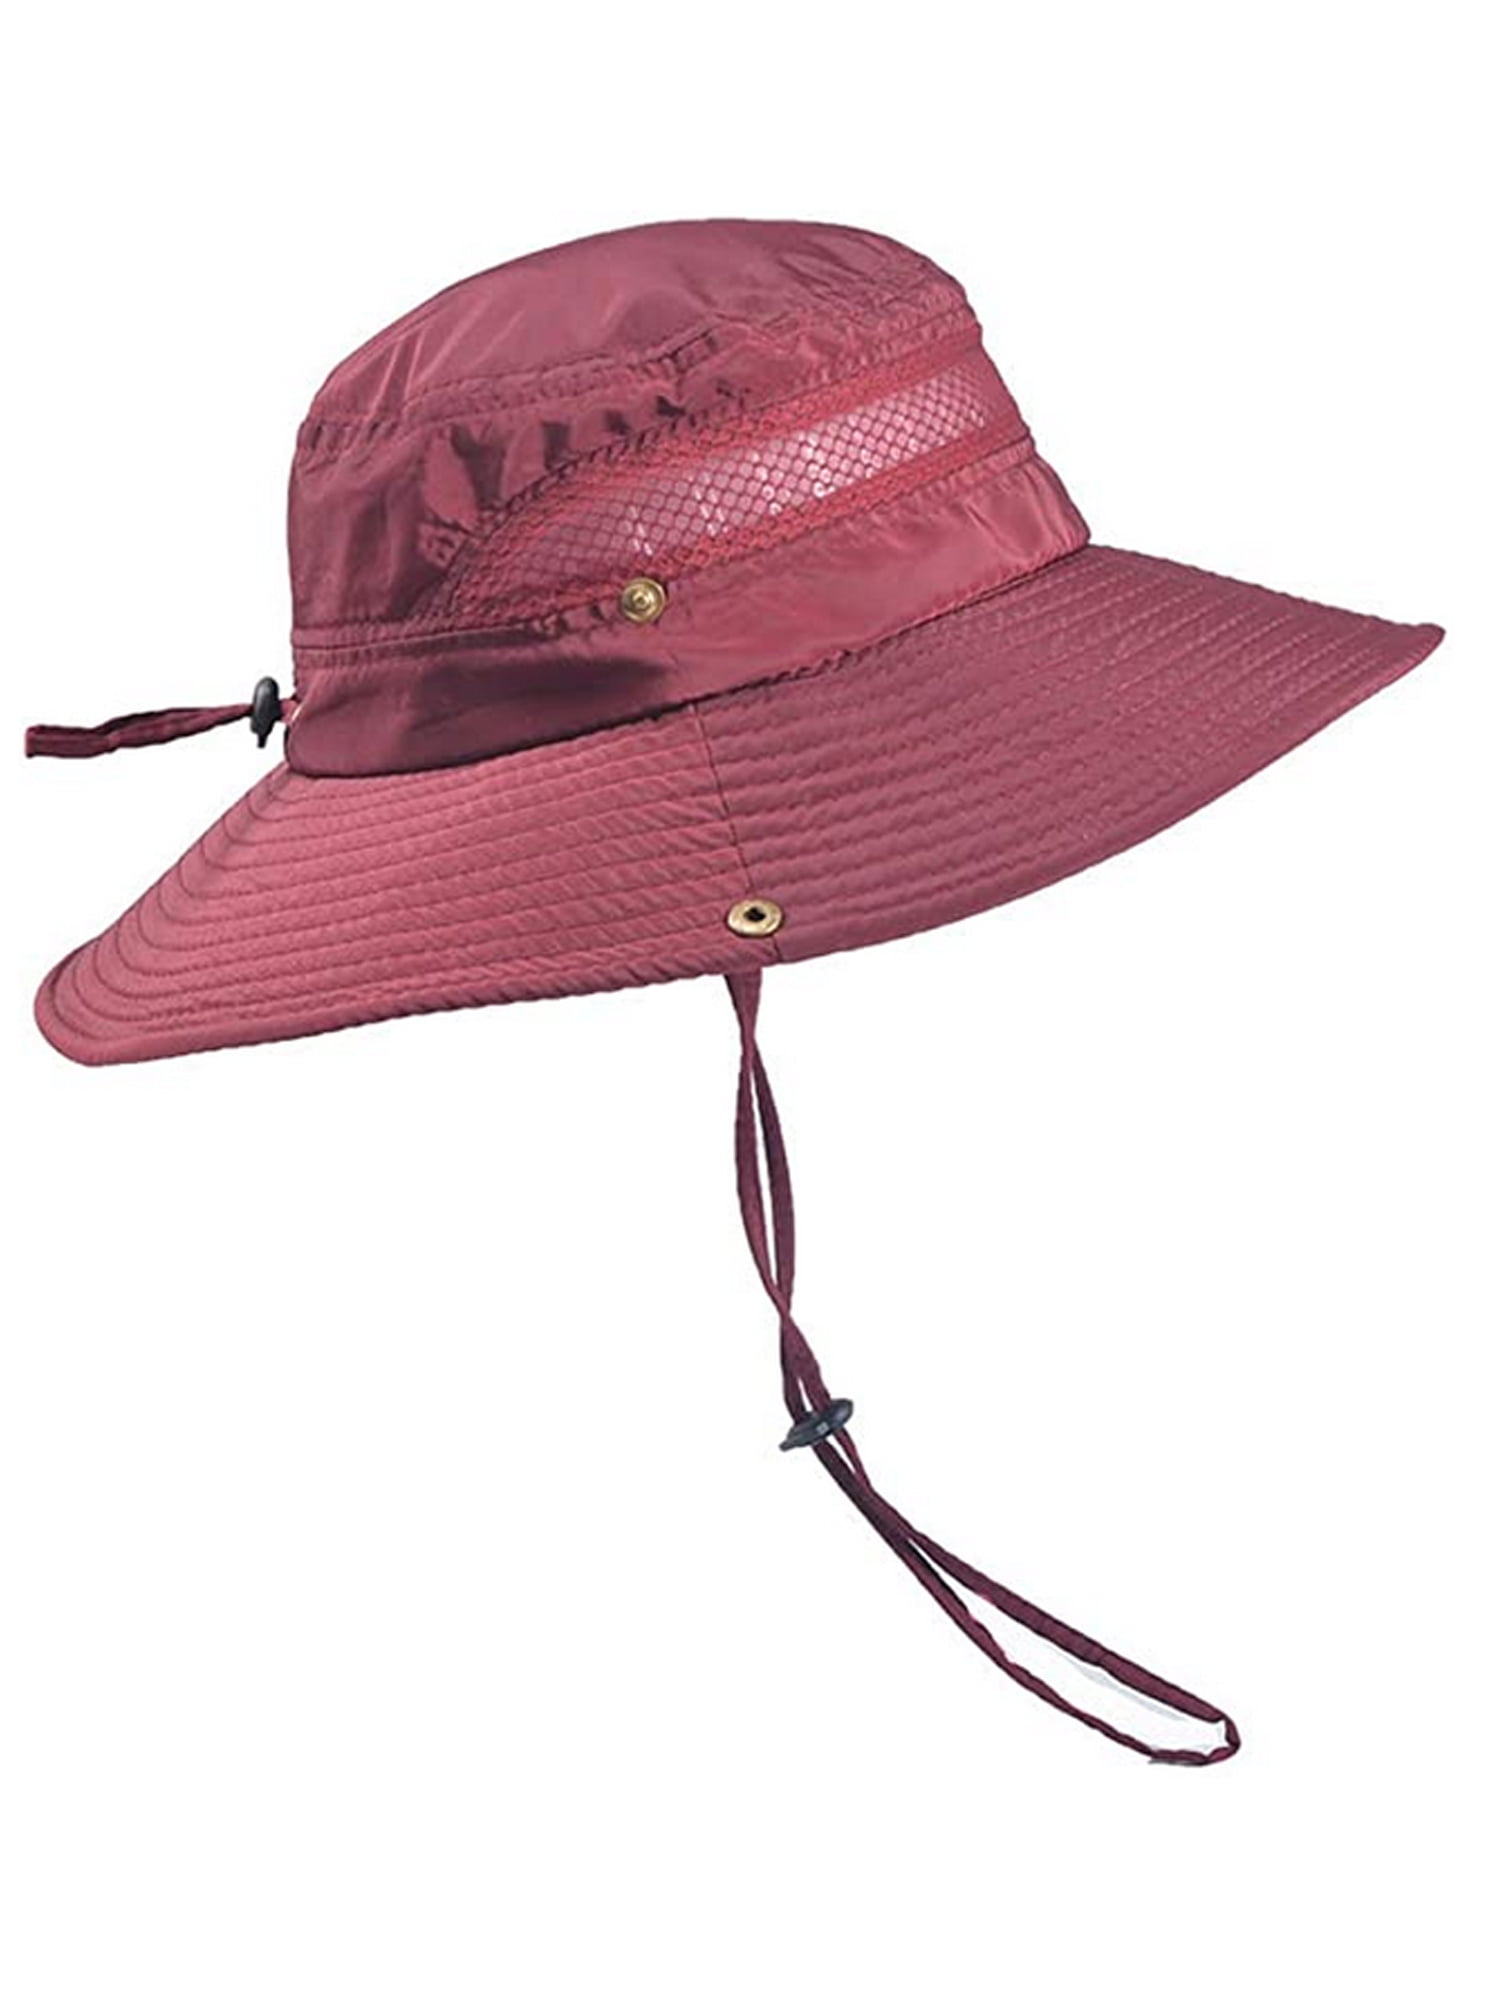 Fisherman's Fishing Unisex Sun Bucket Safari Hiking Cotton Army Cap Boonie Hat